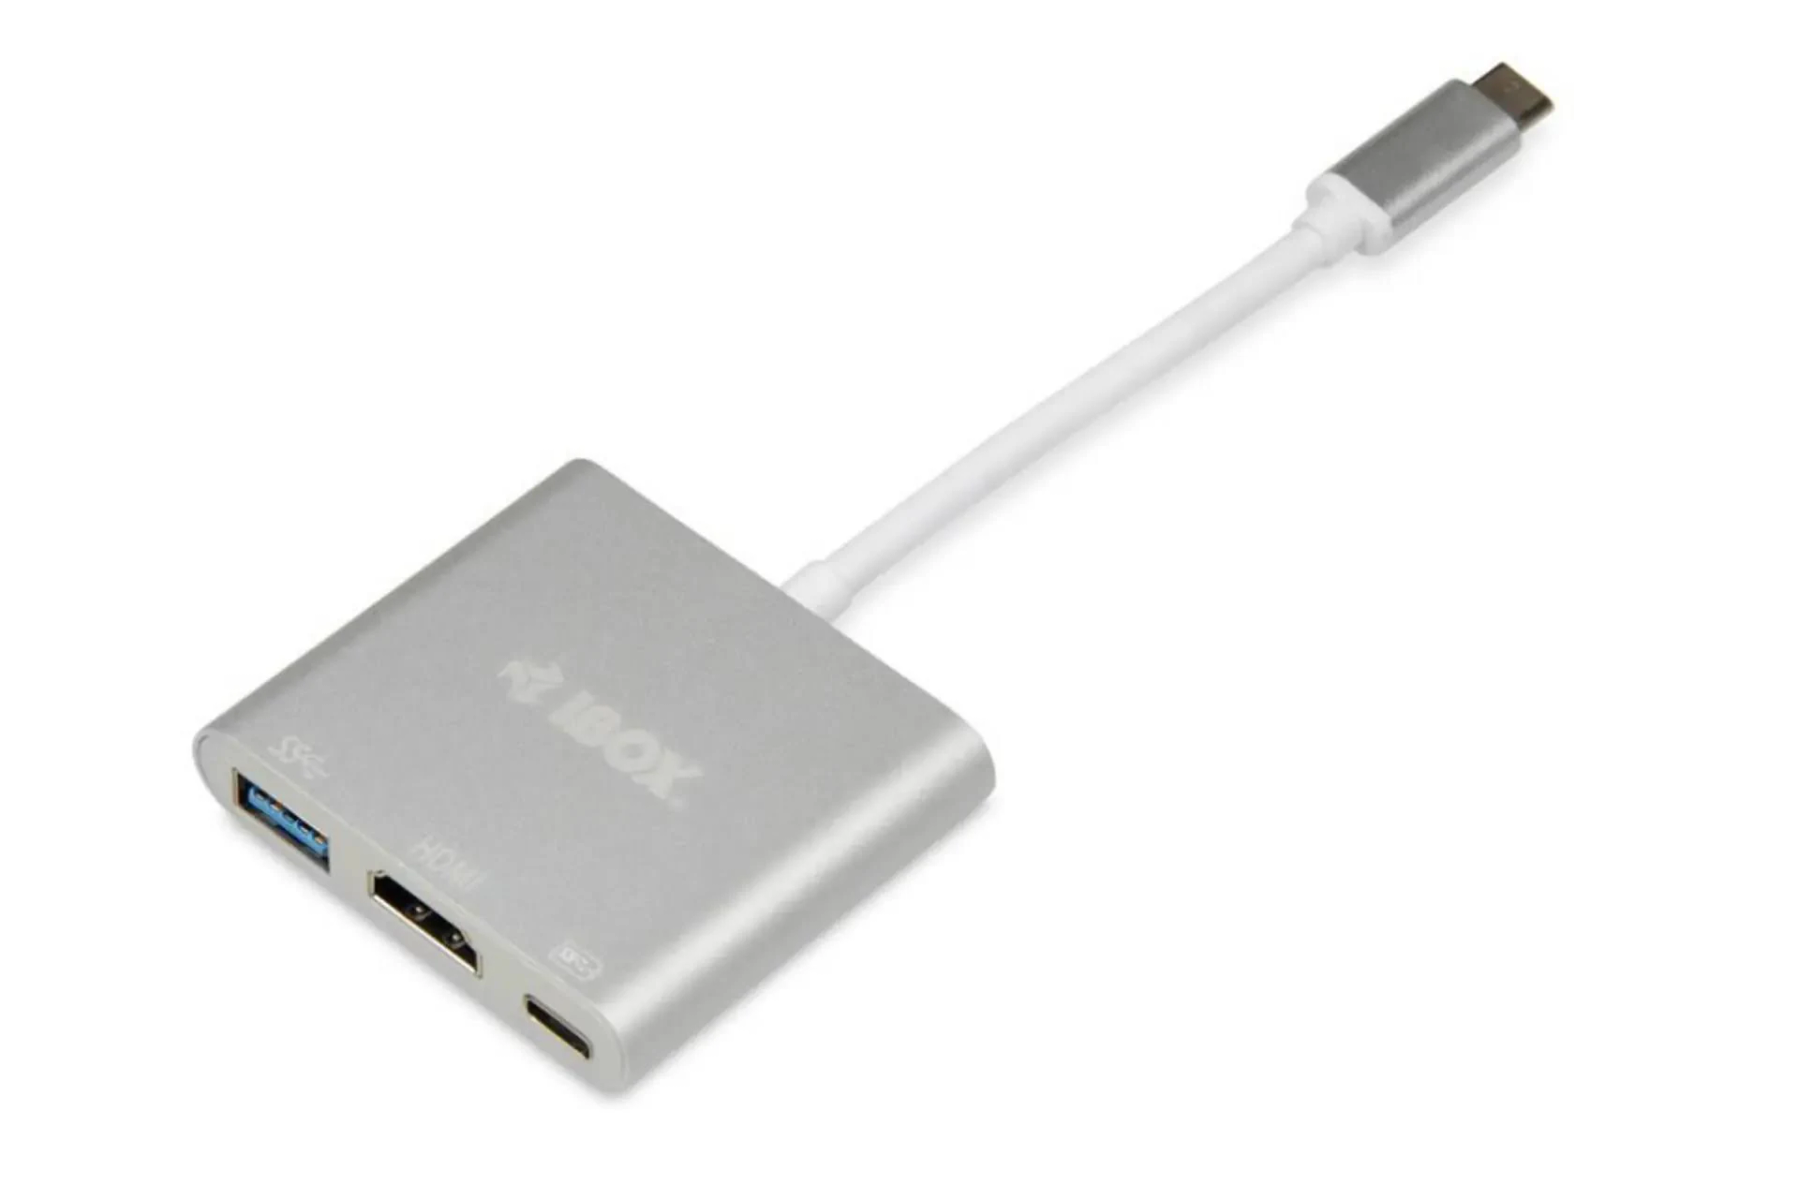 IBOX Weiß USB, IUH3CFT1, Hub